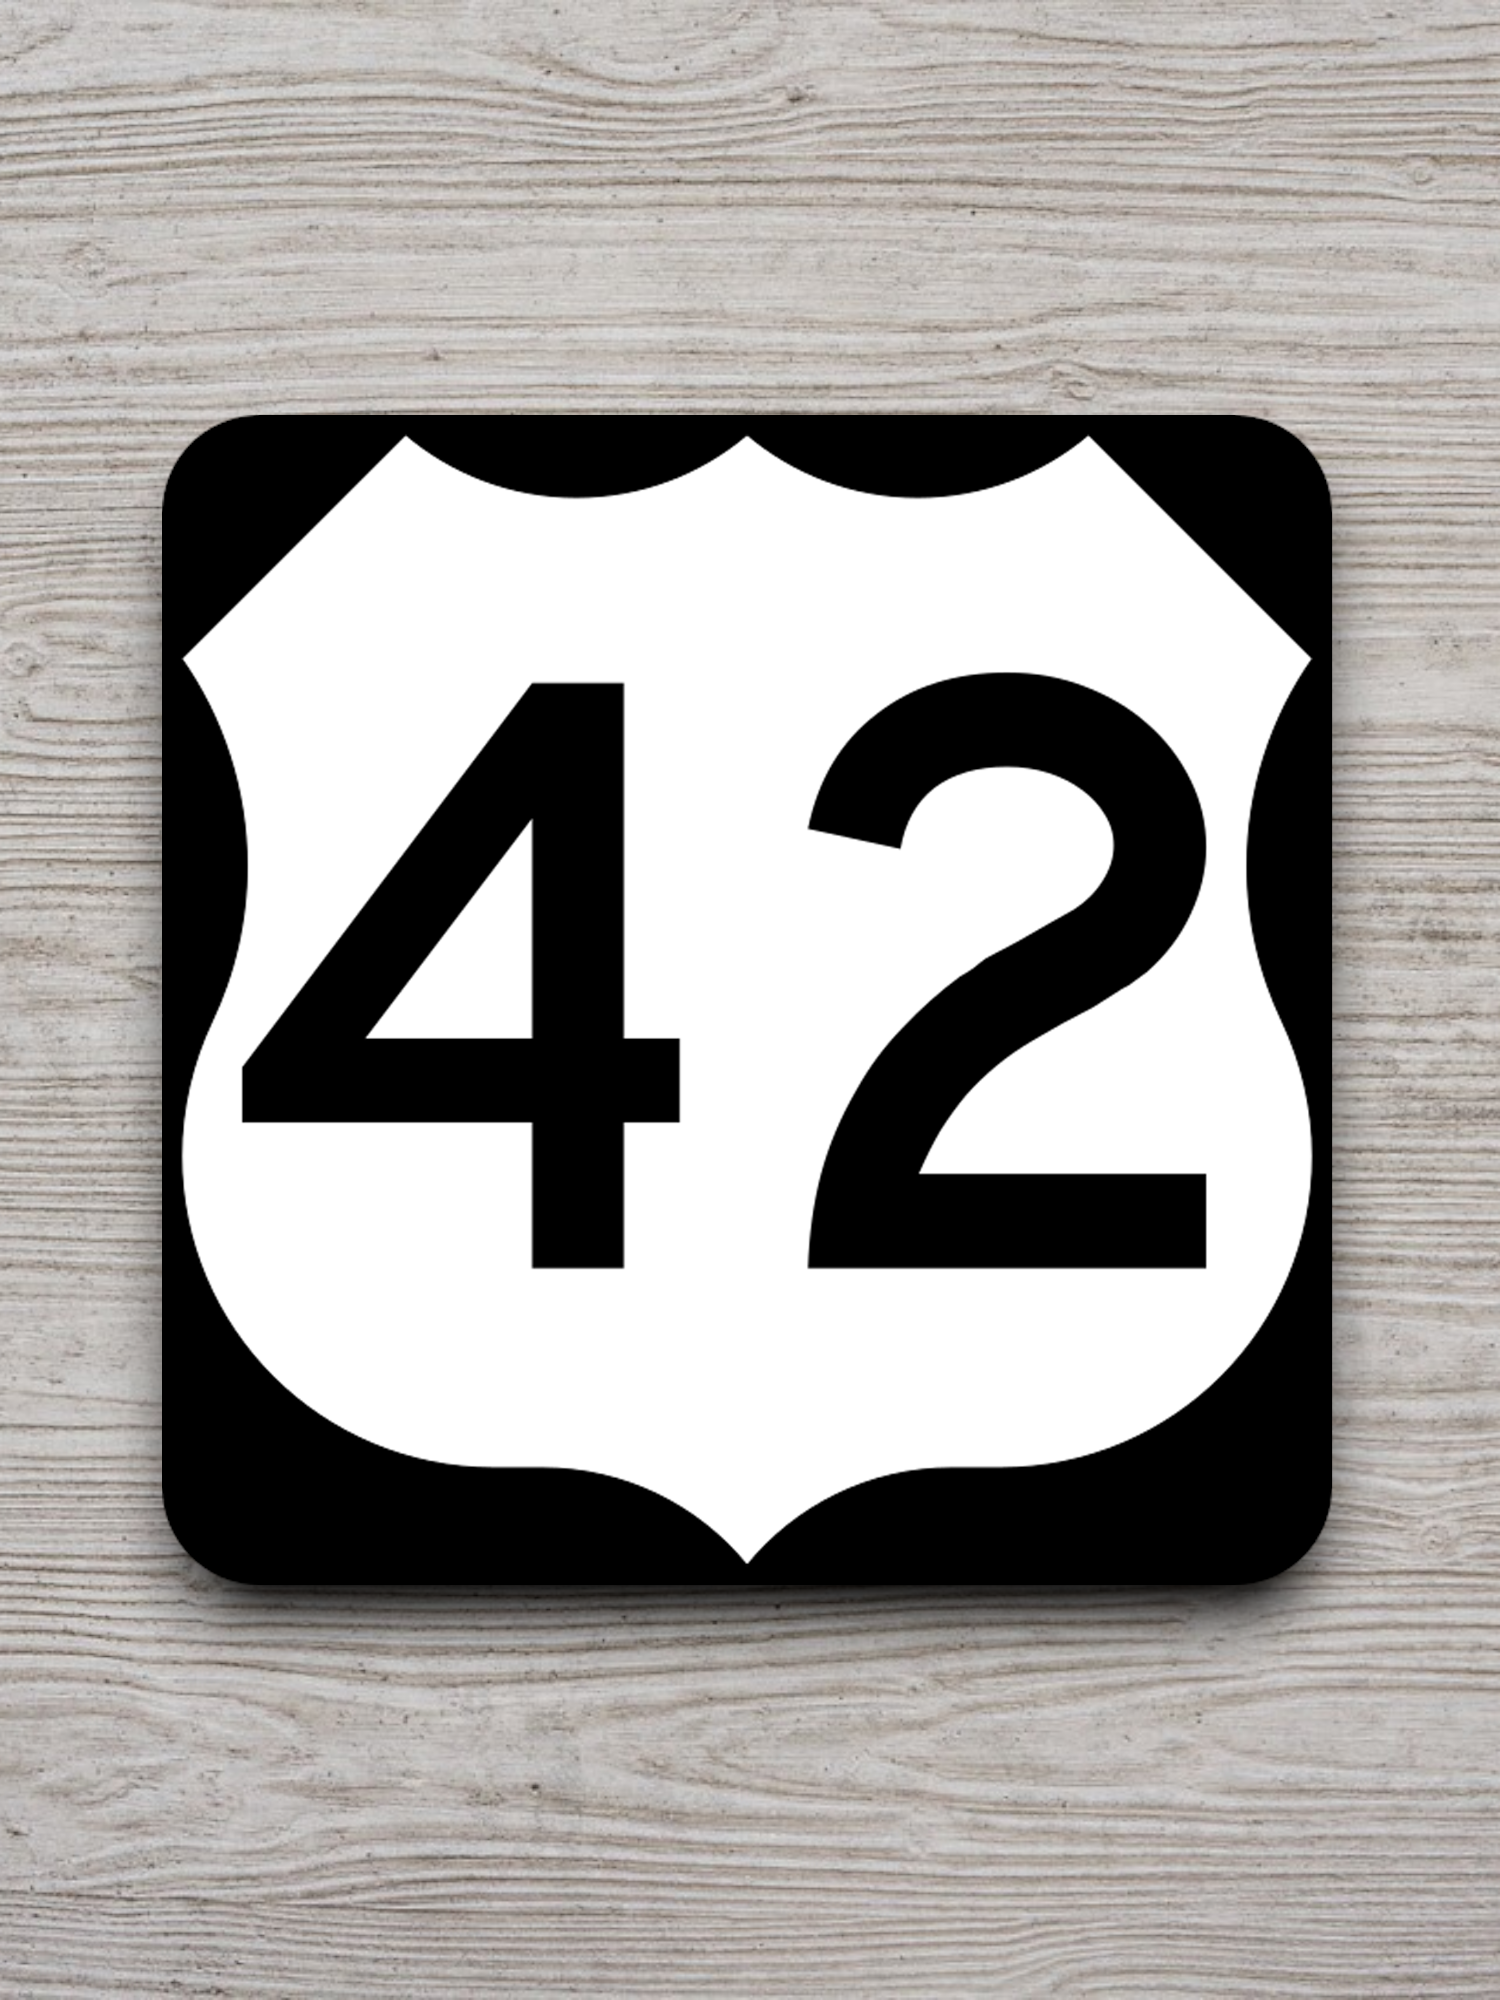 U.S. Route 42 Road Sign Sticker